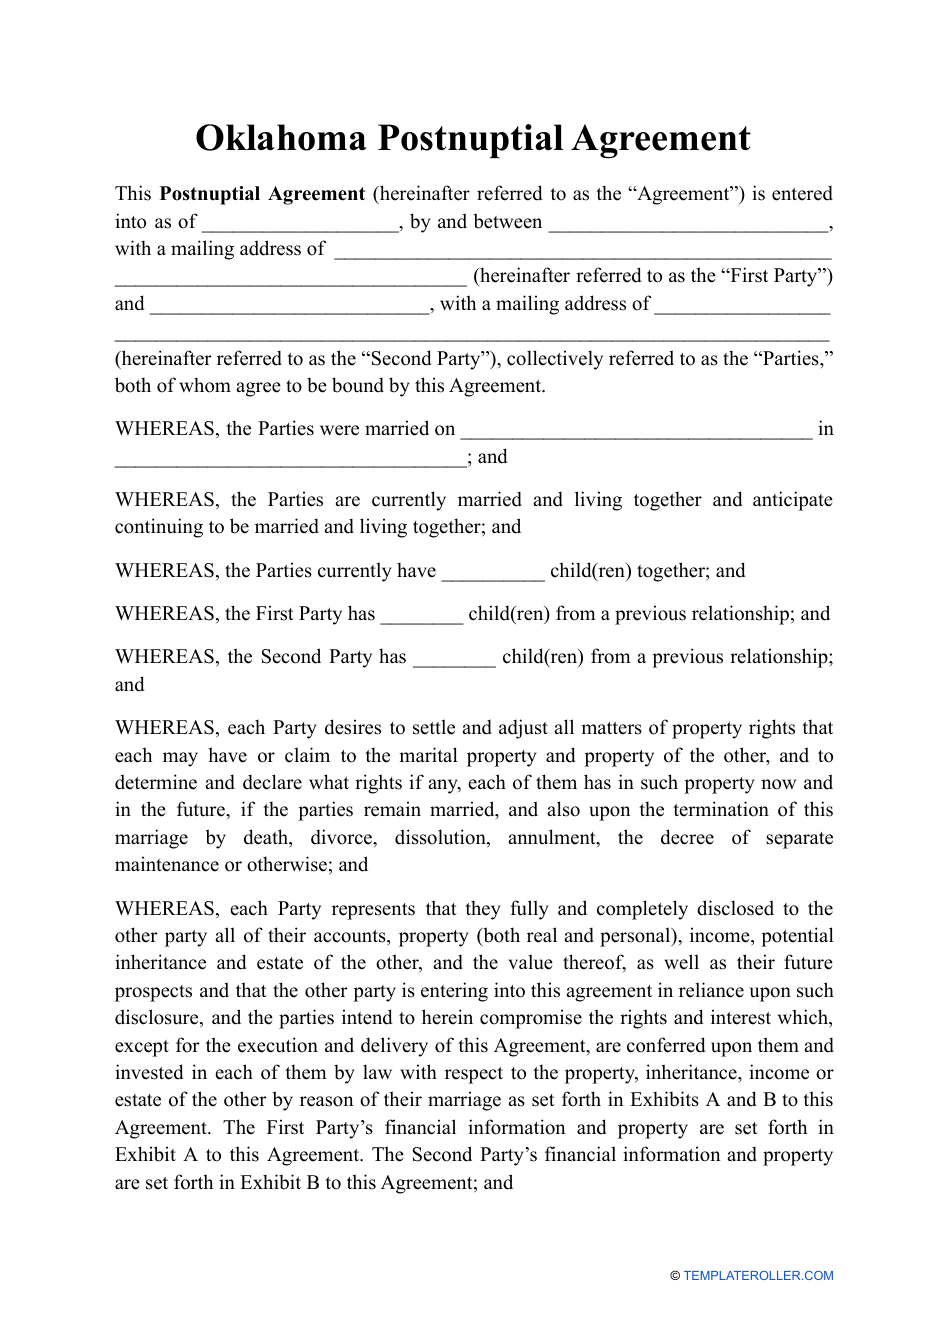 Postnuptial Agreement Template - Oklahoma, Page 1